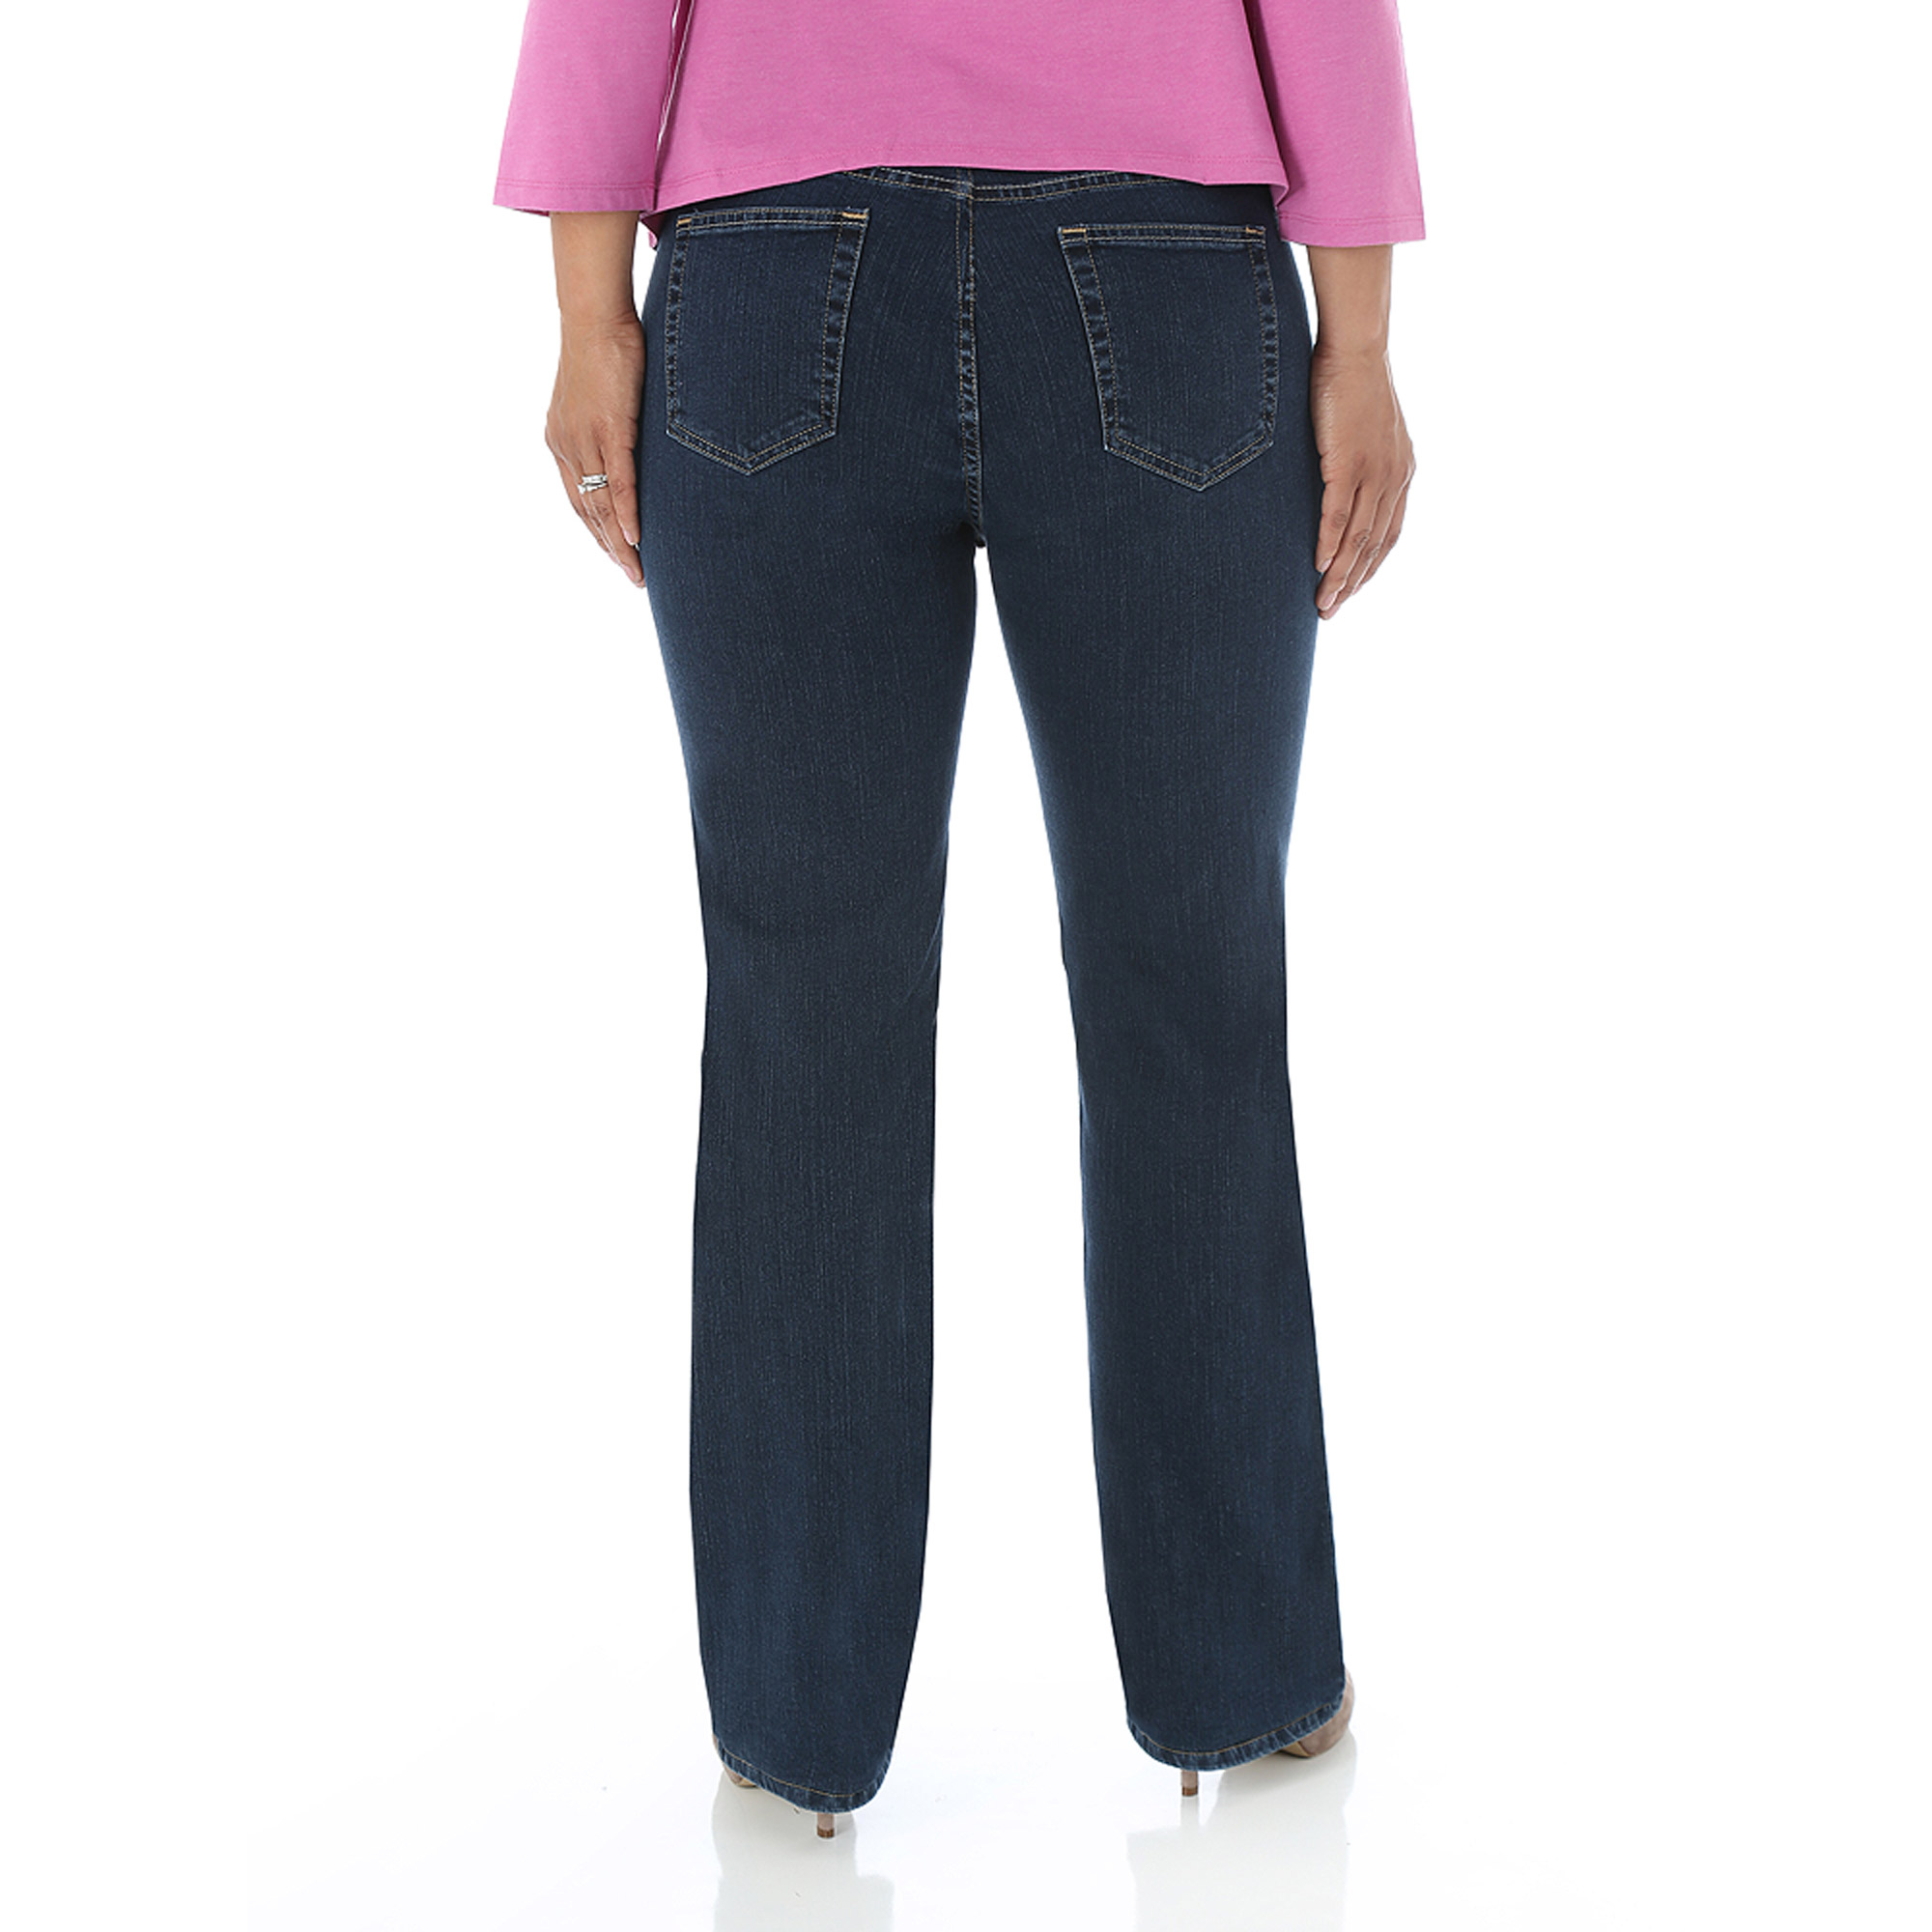 Women's Plus-Size Classic Comfort Jeans, Petite - image 2 of 4